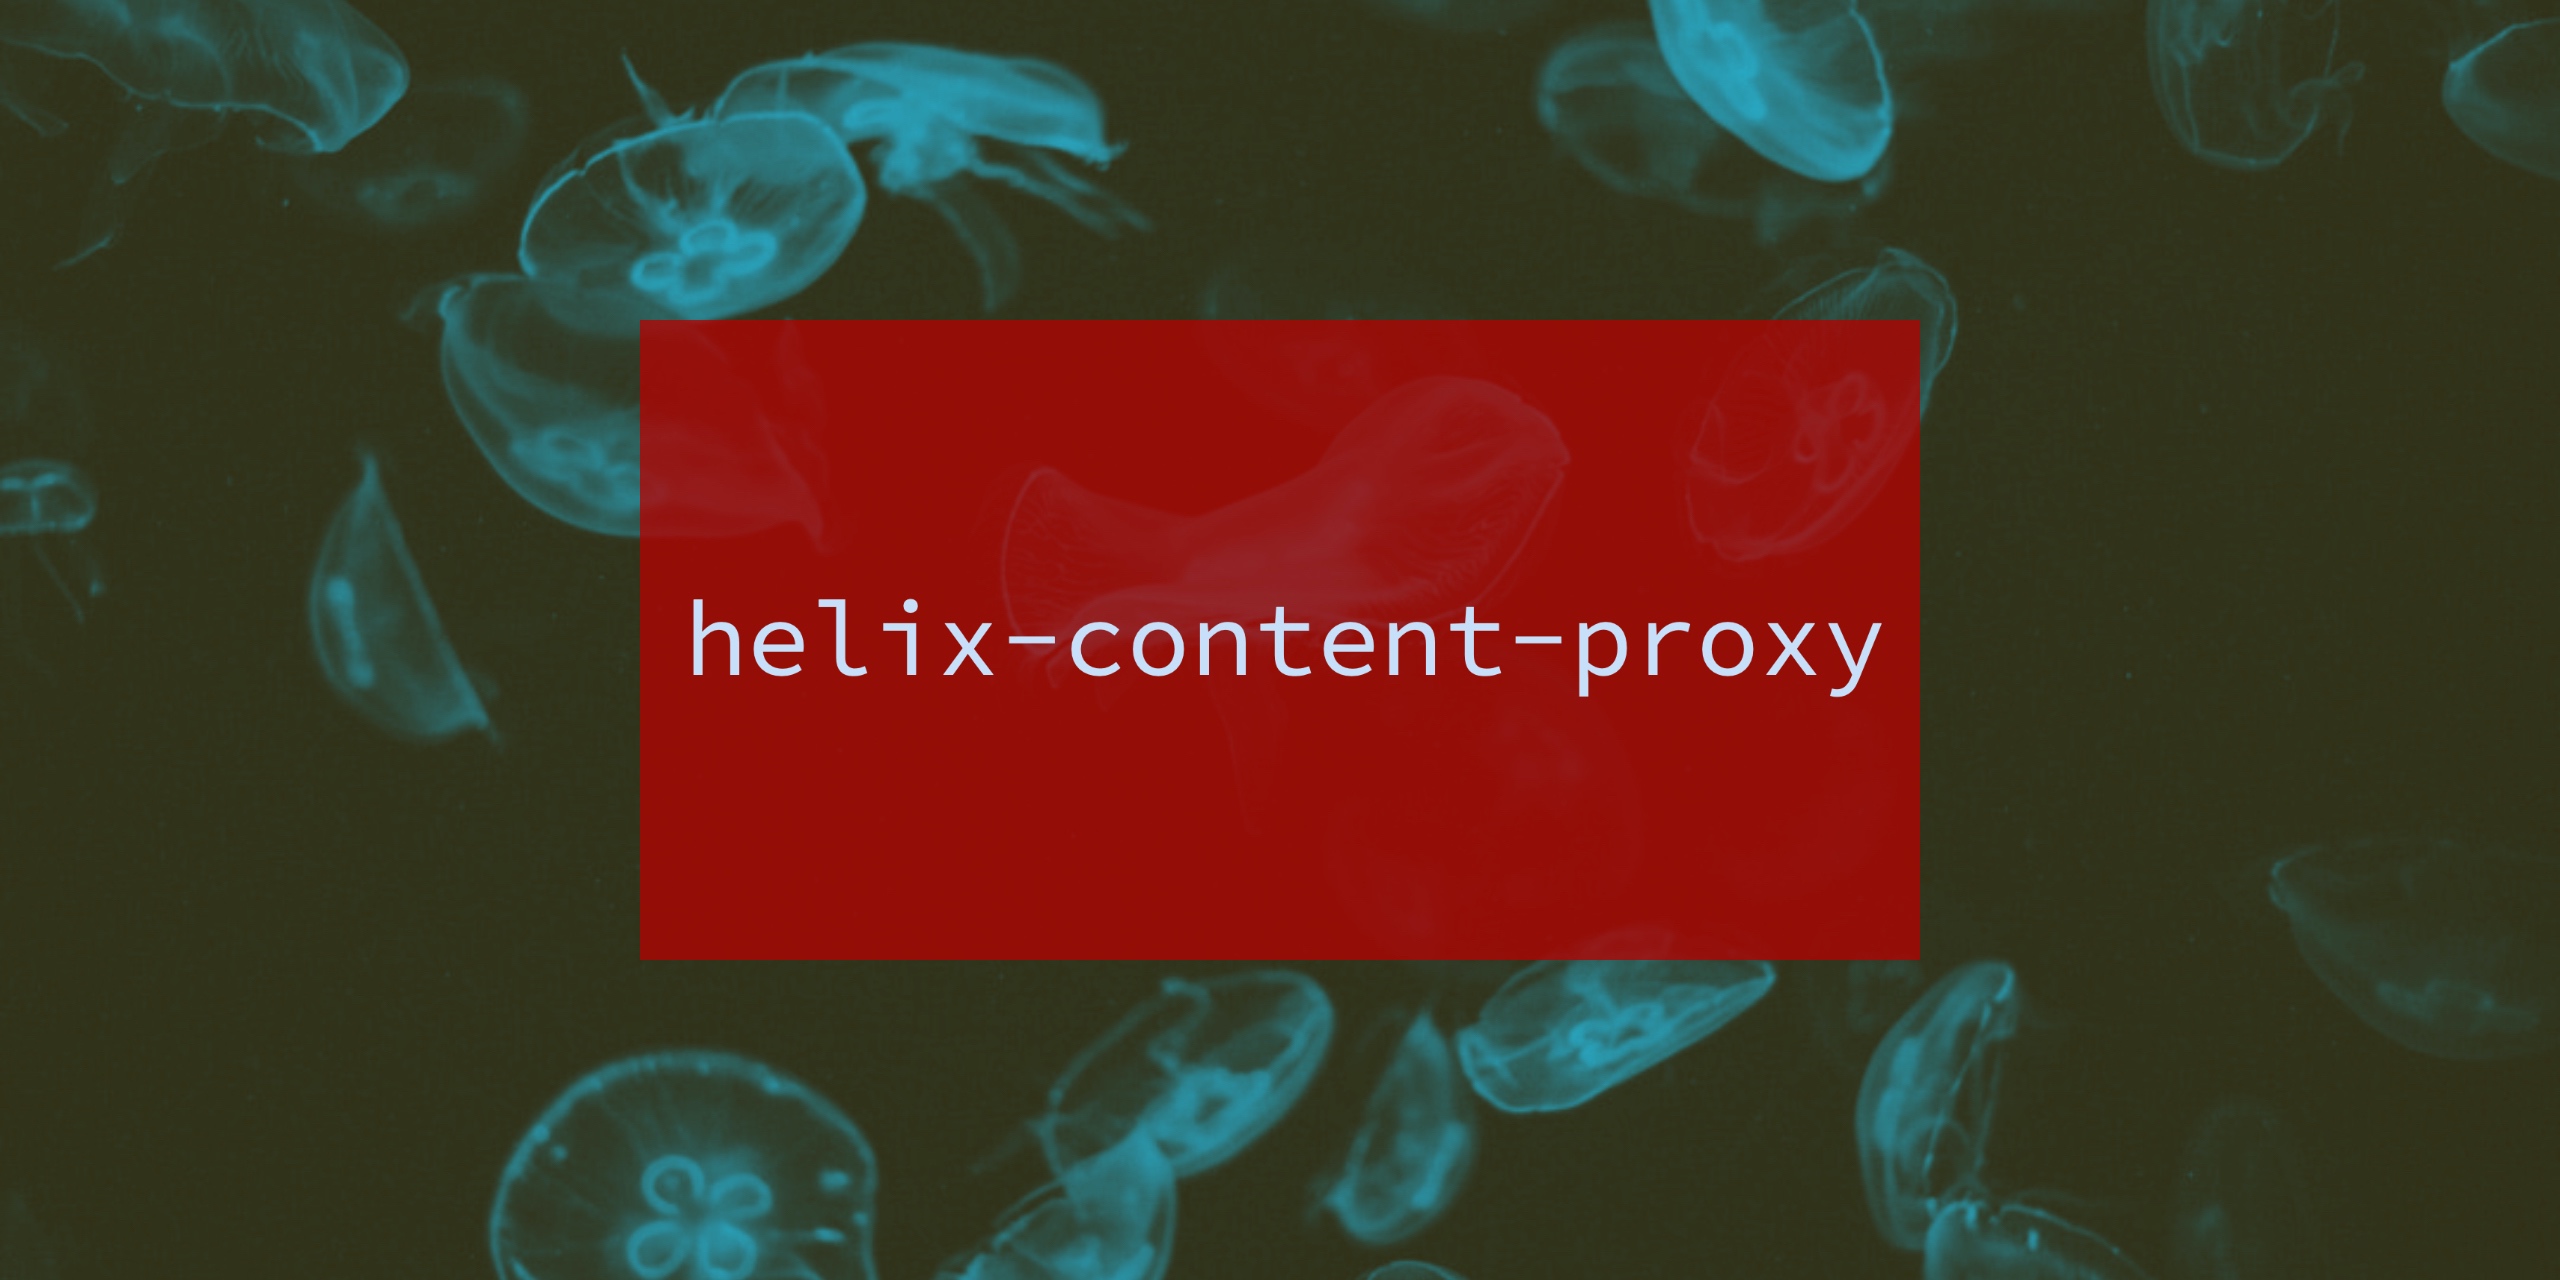 helix-content-proxy